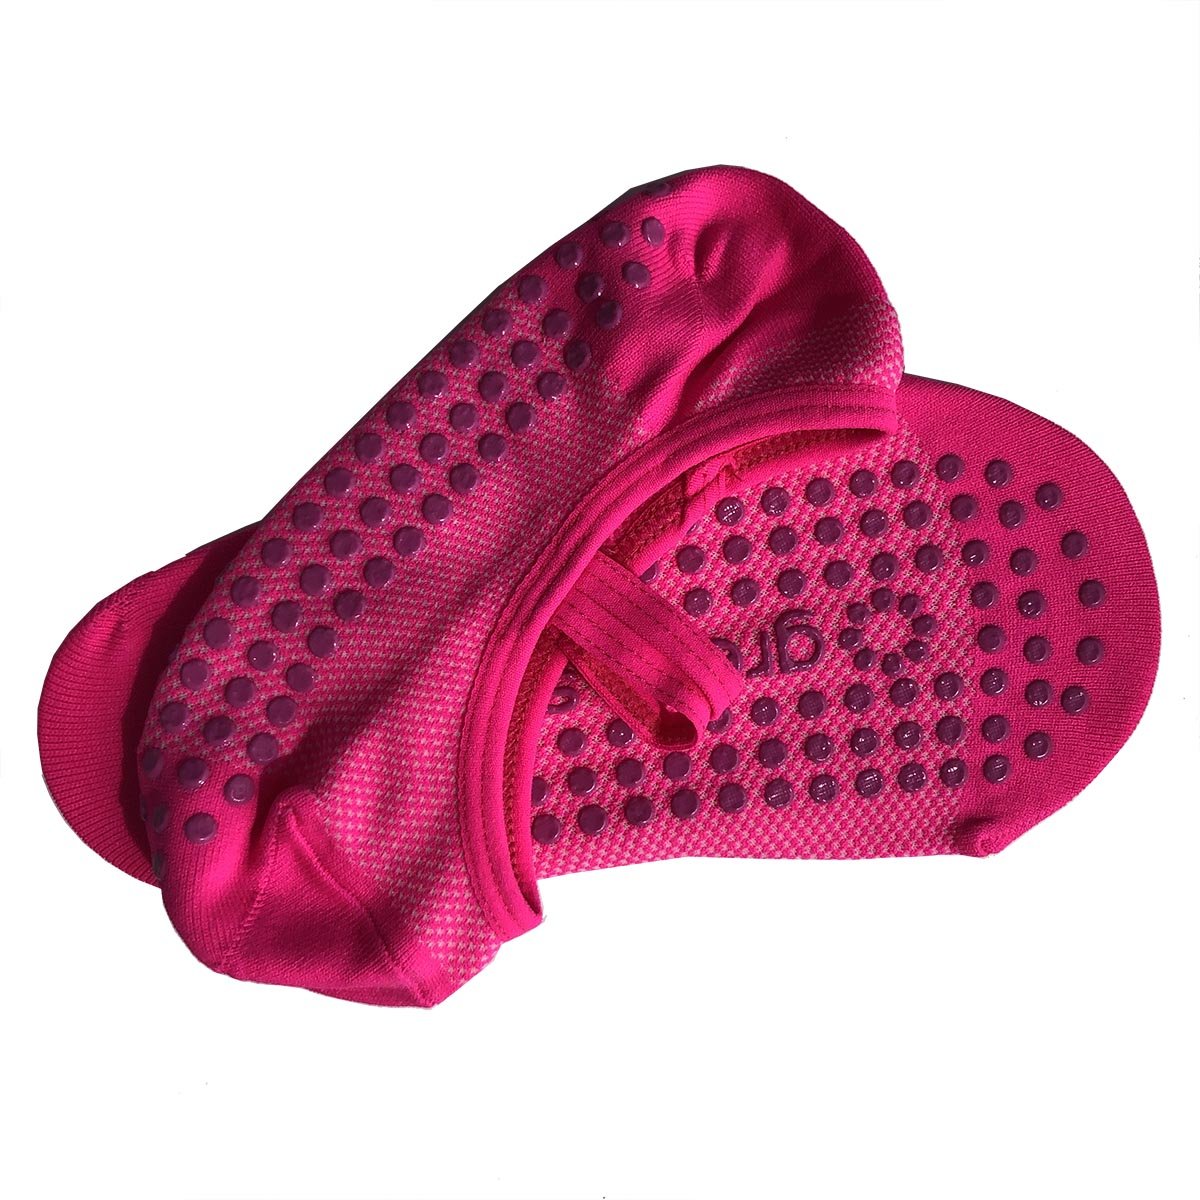 Mia Mesh Ballet Grip Socks - Neon Pink